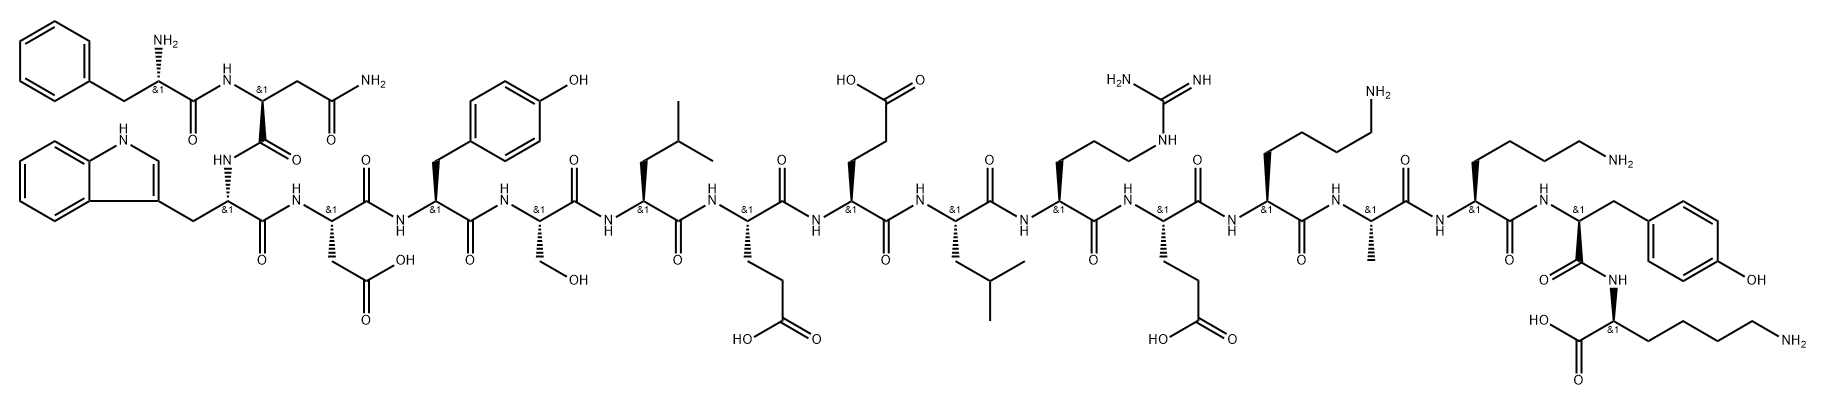 L-Lysine, L-phenylalanyl-L-asparaginyl-L-tryptophyl-L-α-aspartyl-L-tyrosyl-L-seryl-L-leucyl-L-α-glutamyl-L-α-glutamyl-L-leucyl-L-arginyl-L-α-glutamyl-L-lysyl-L-alanyl-L-lysyl-L-tyrosyl-|